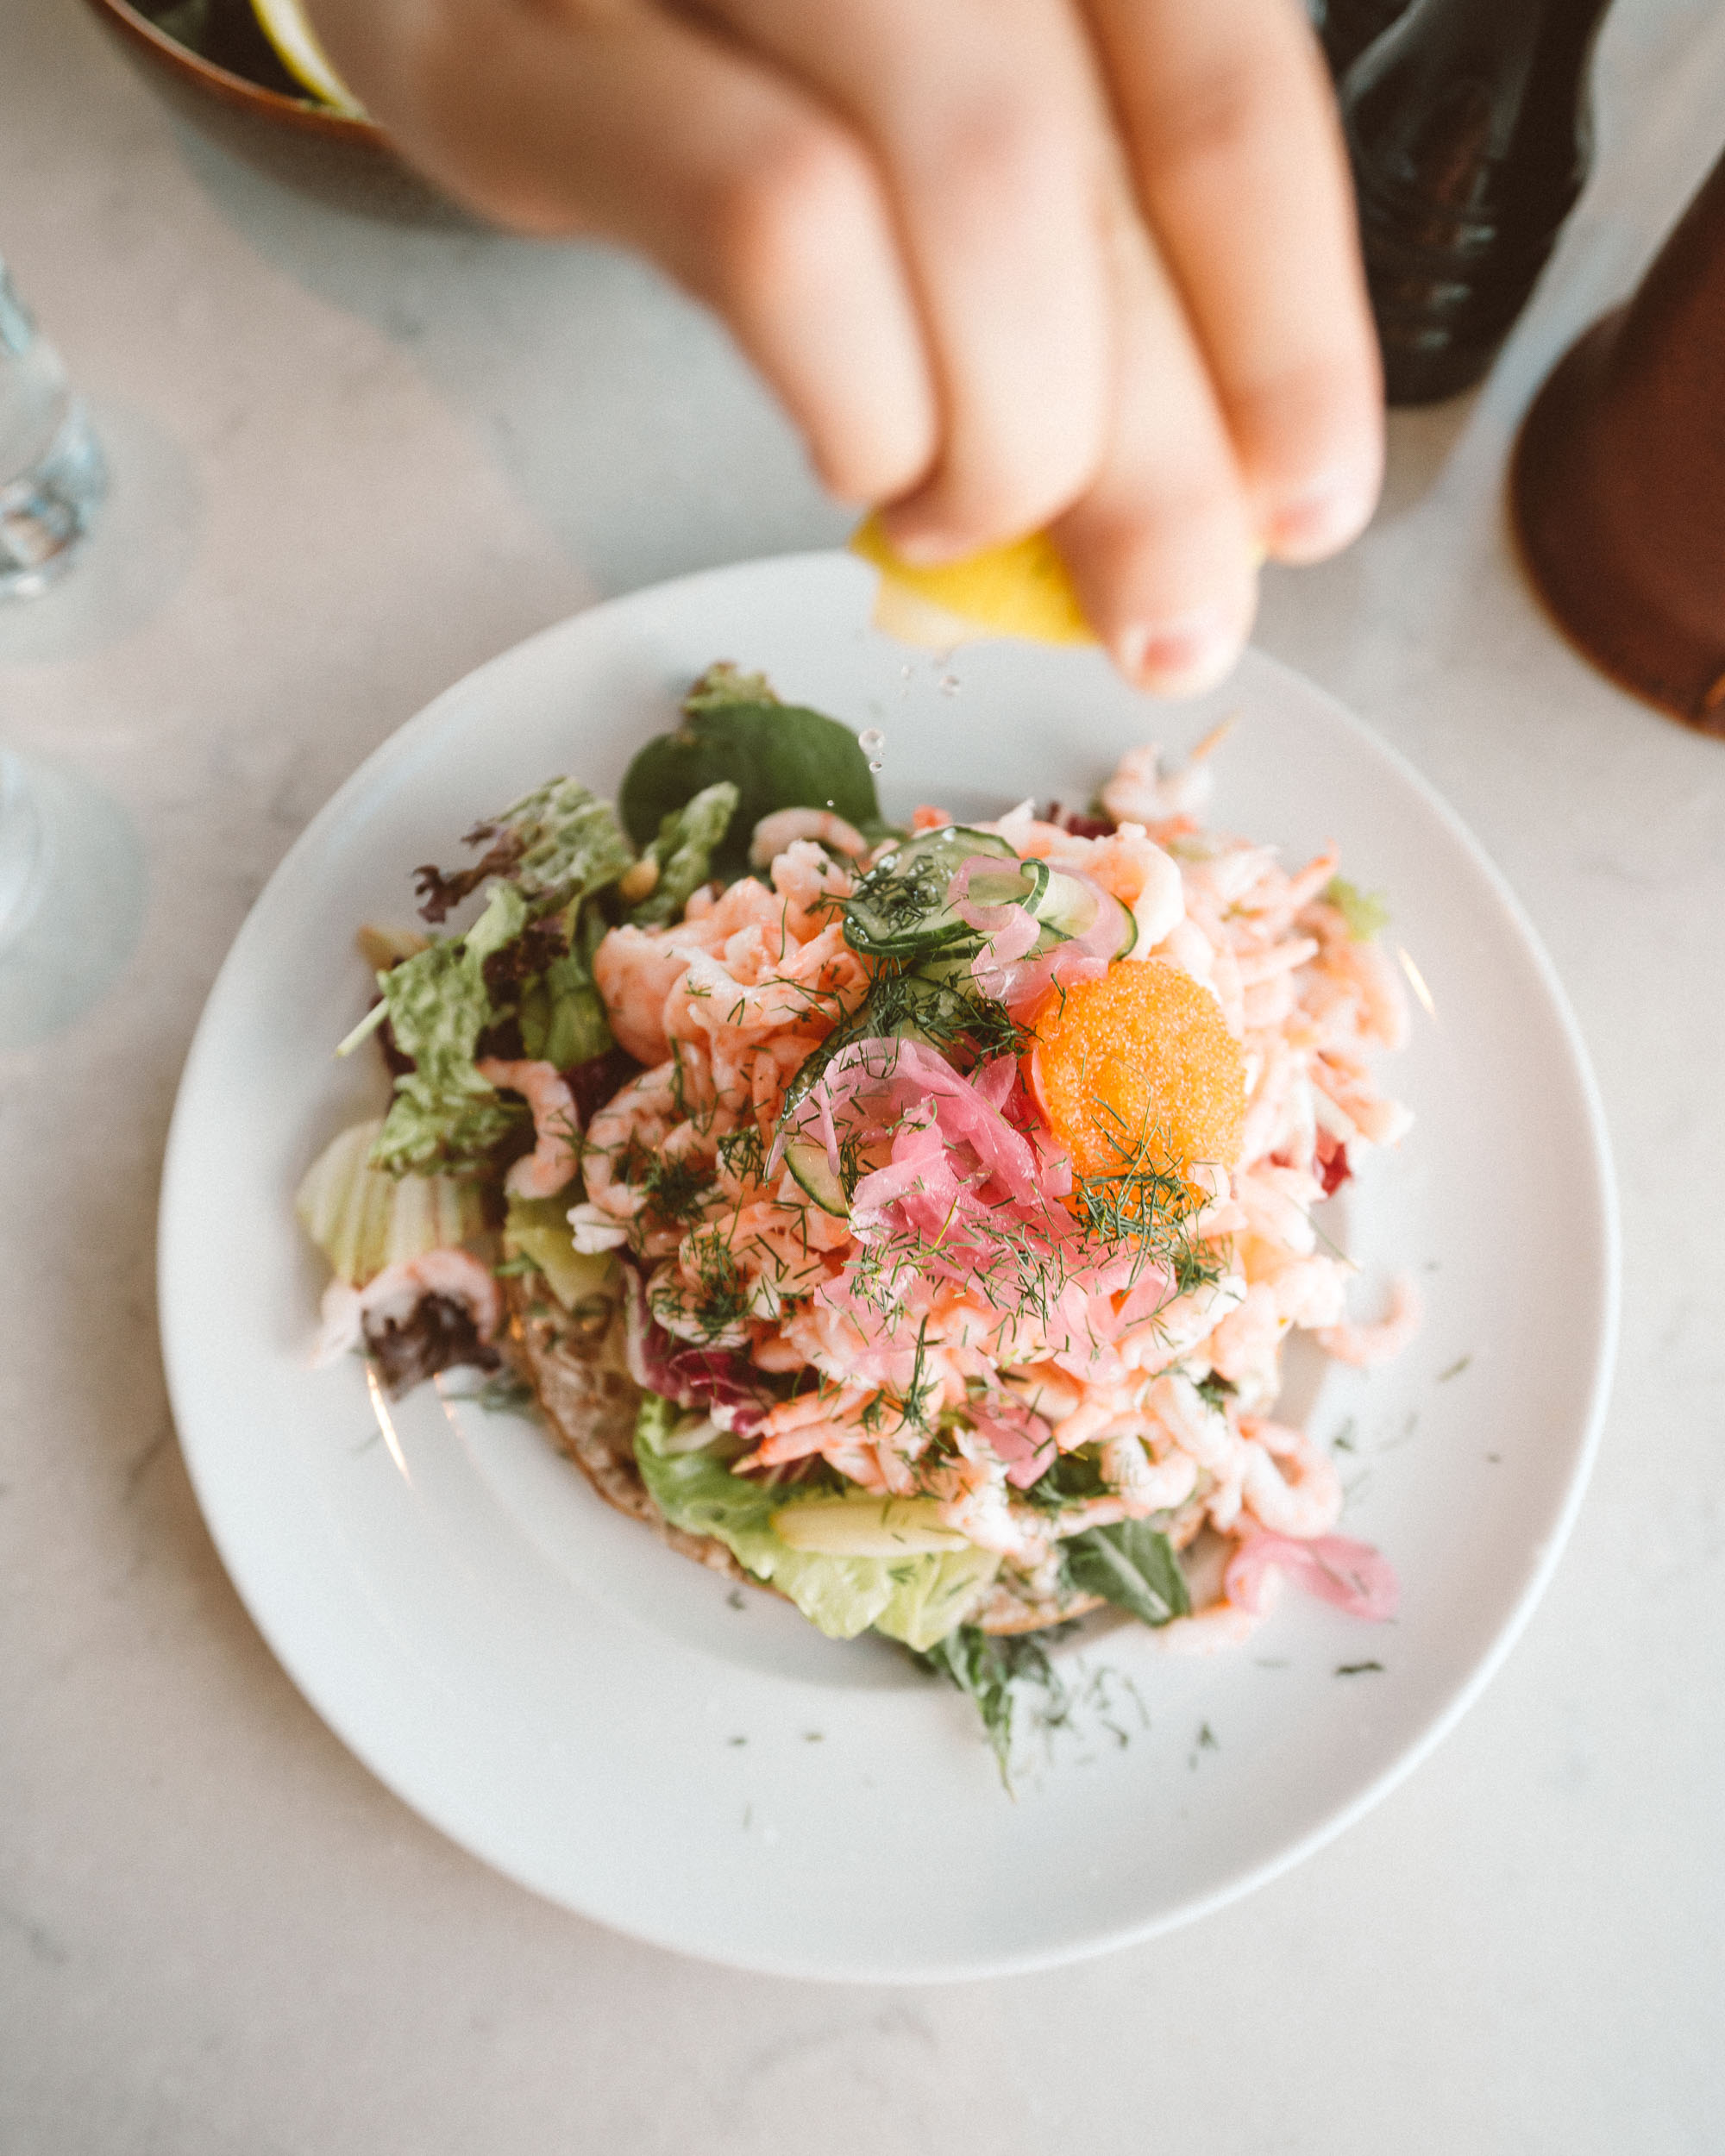 Shrimp sandwich at Heaven 23 in Gothenburg | West Sweden Travel Guide via @finduslost